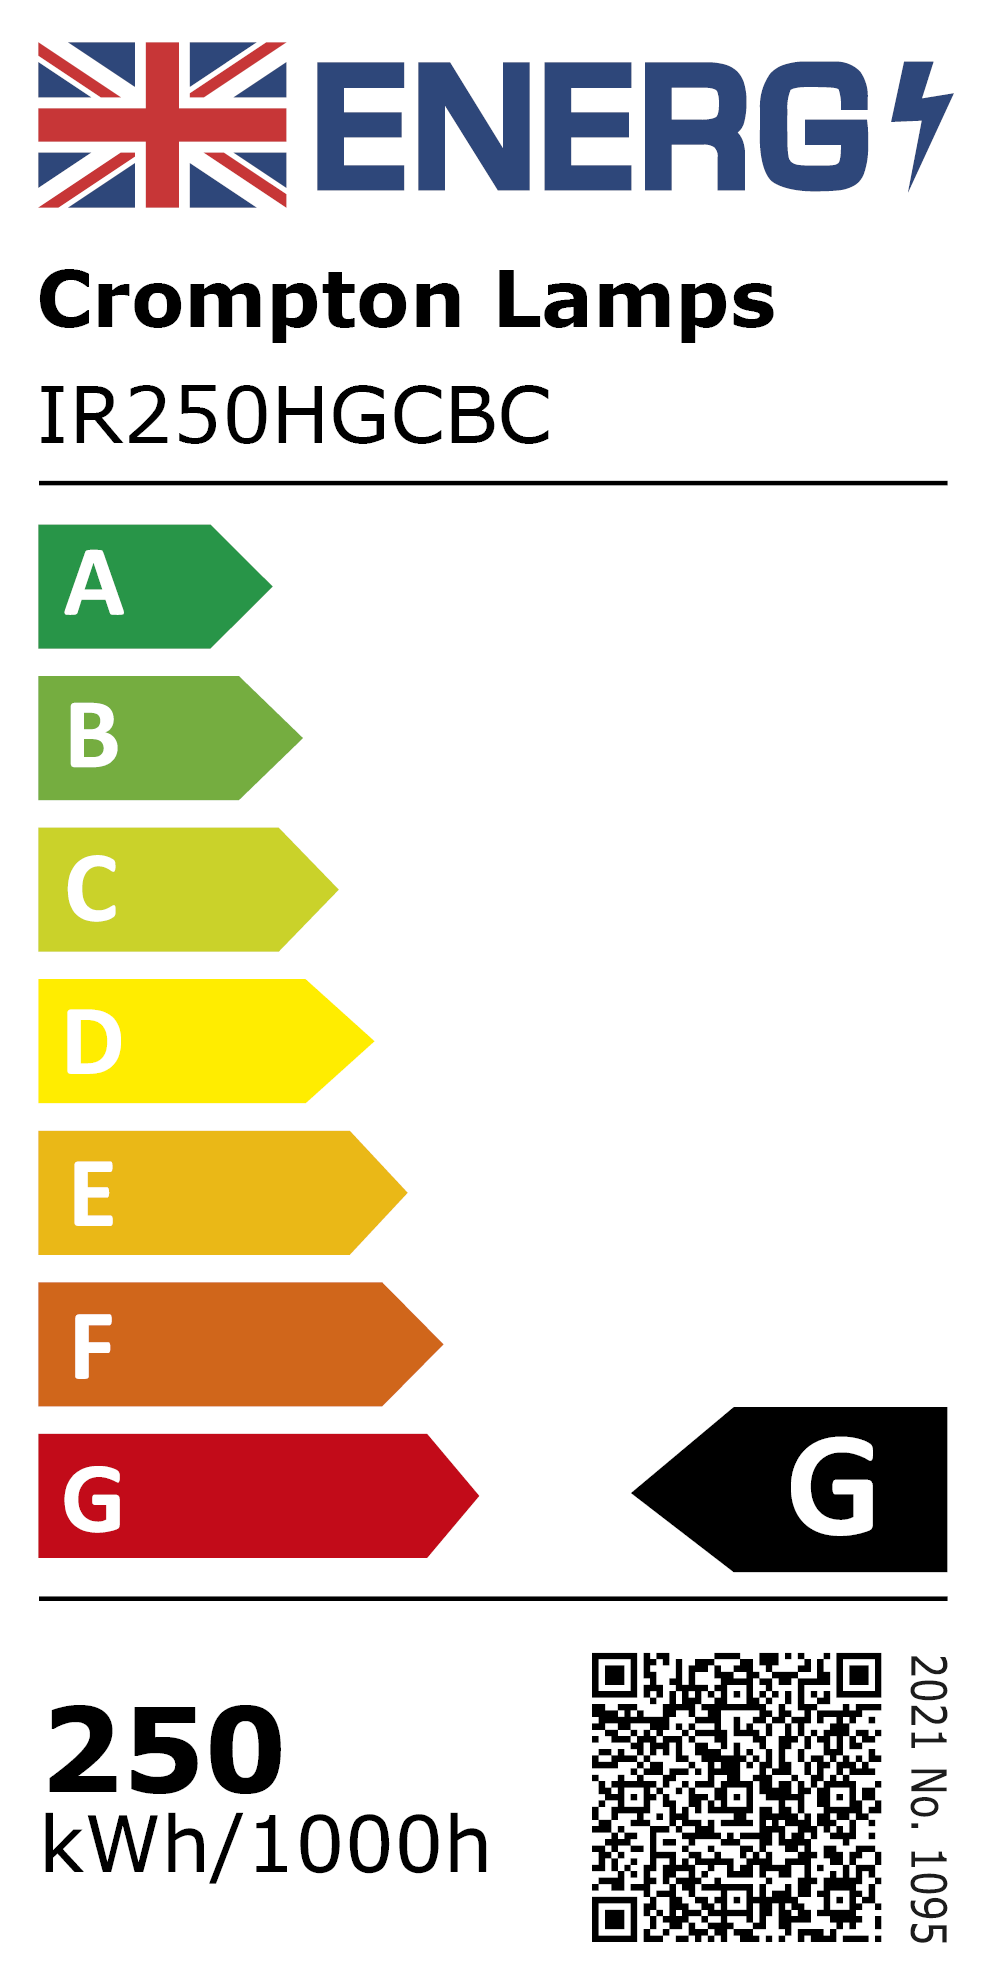 New 2021 Energy Rating Label: MPN IR250HGCBC